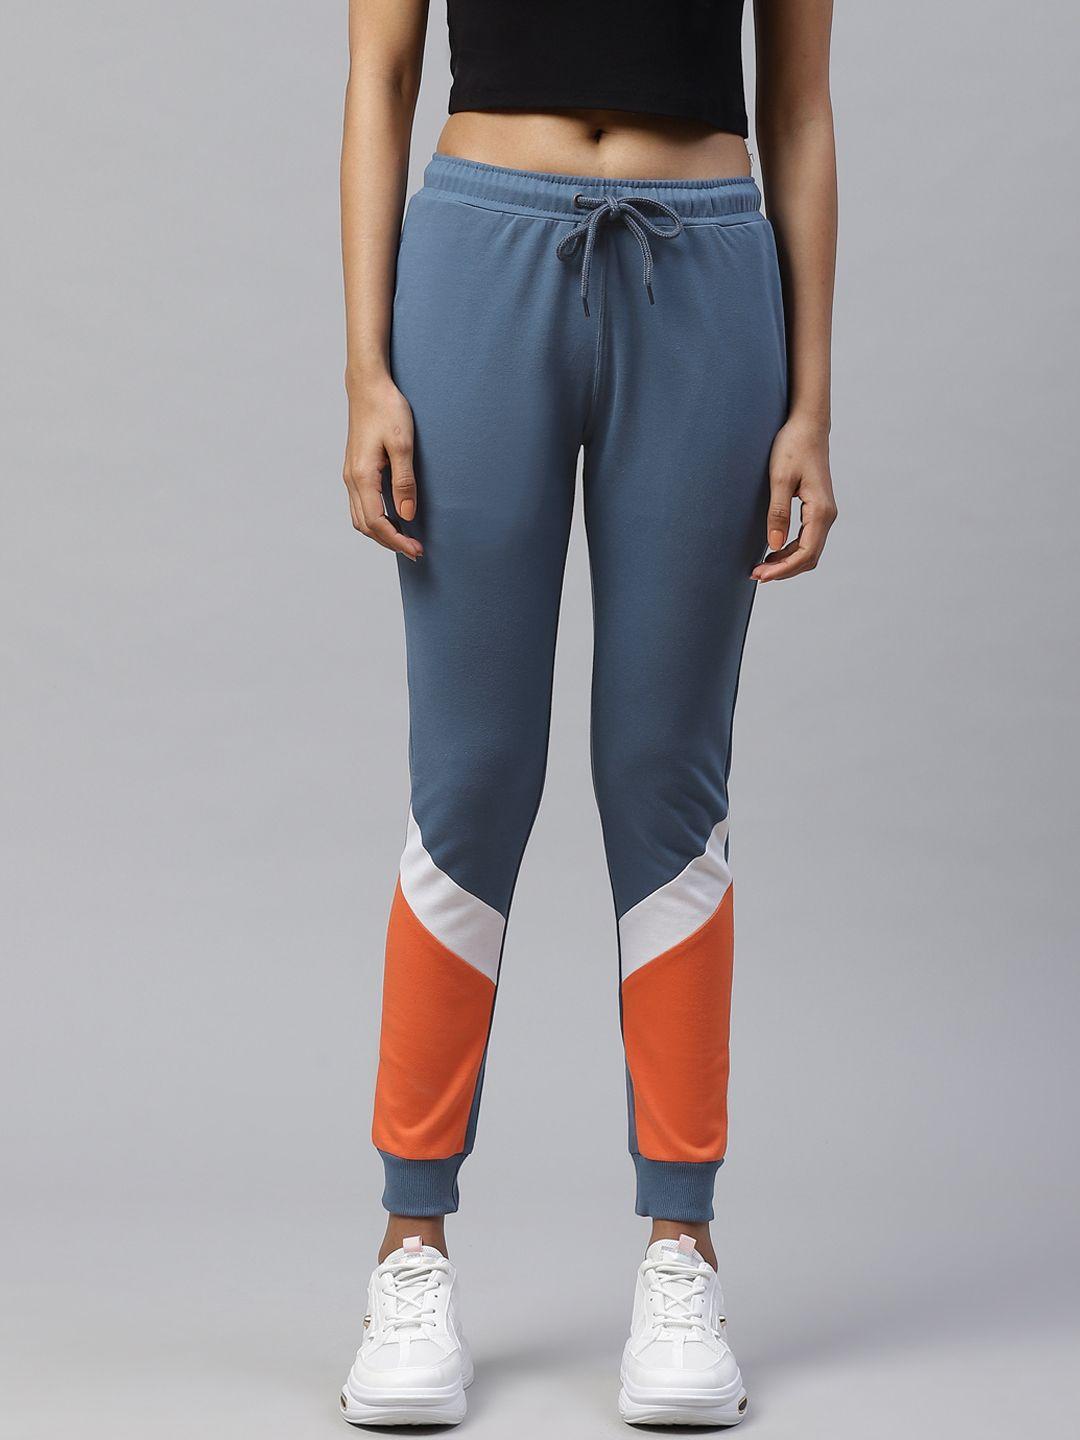 m7 by metronaut women teal blue & orange colourblocked slim fit joggers